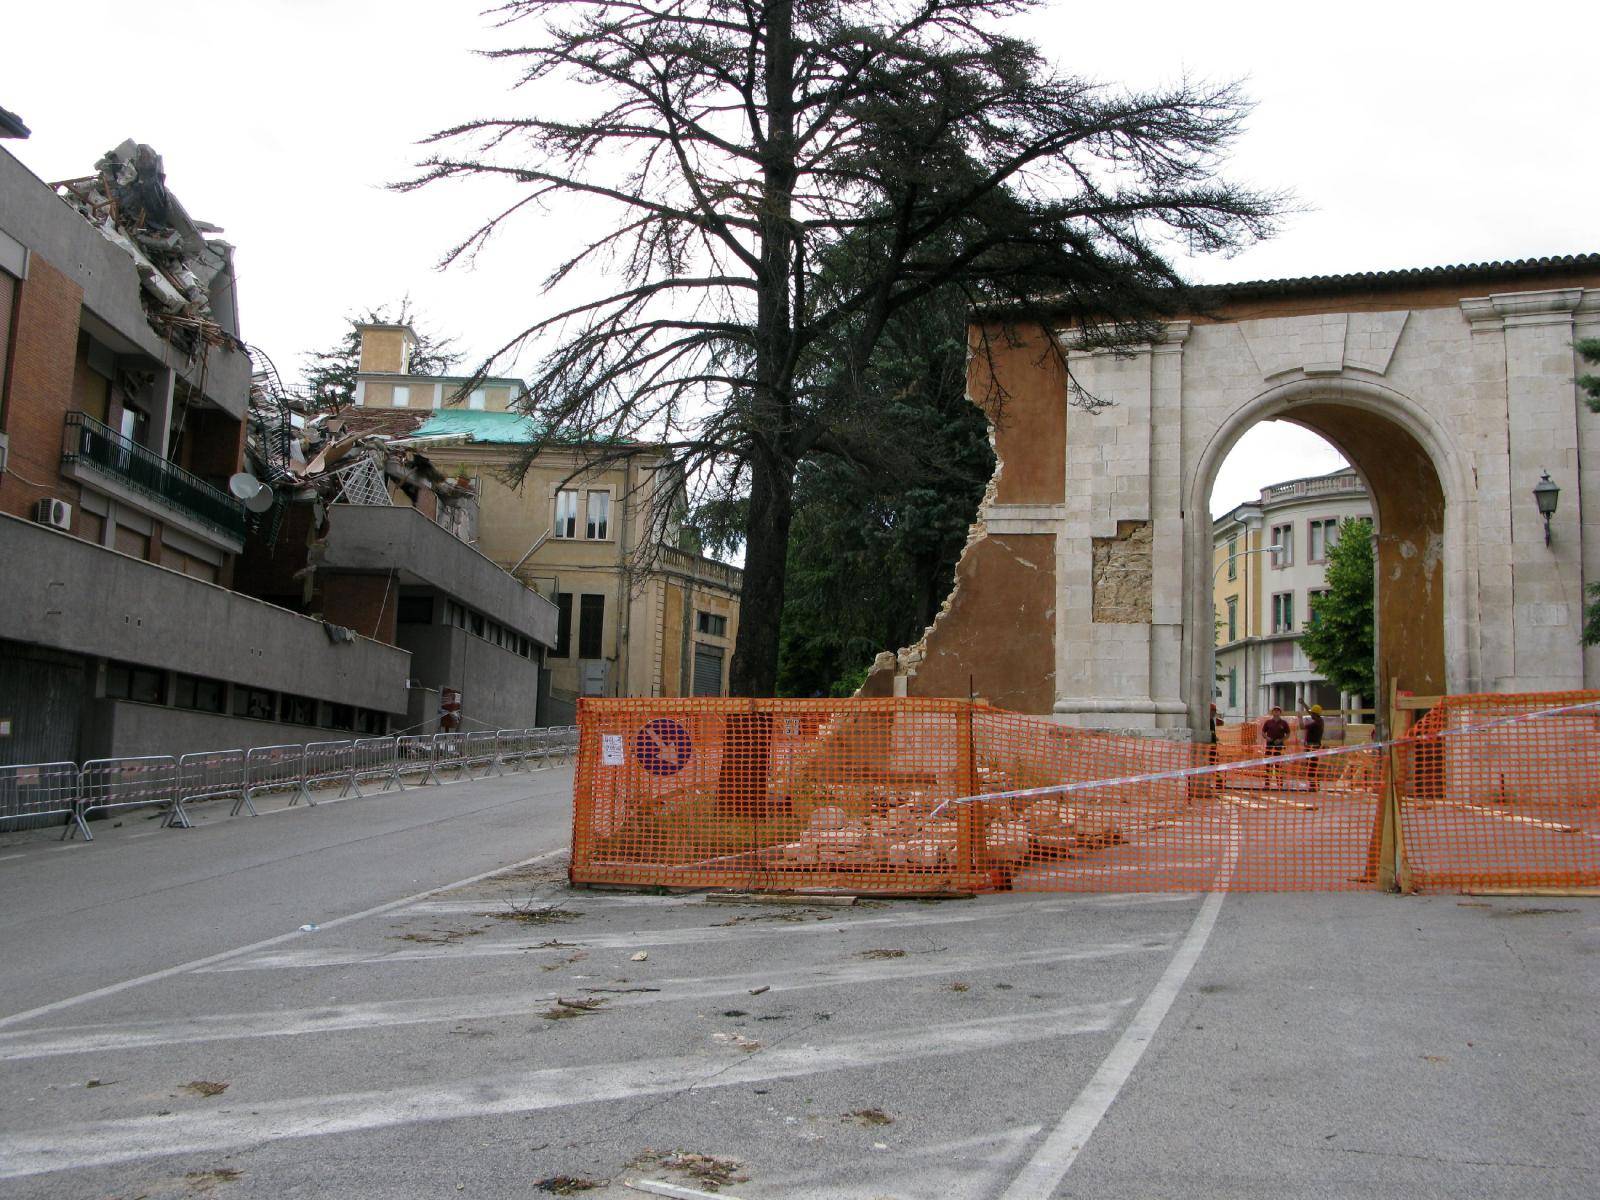 Italy - L'Aquila - Earthquake's aftermath